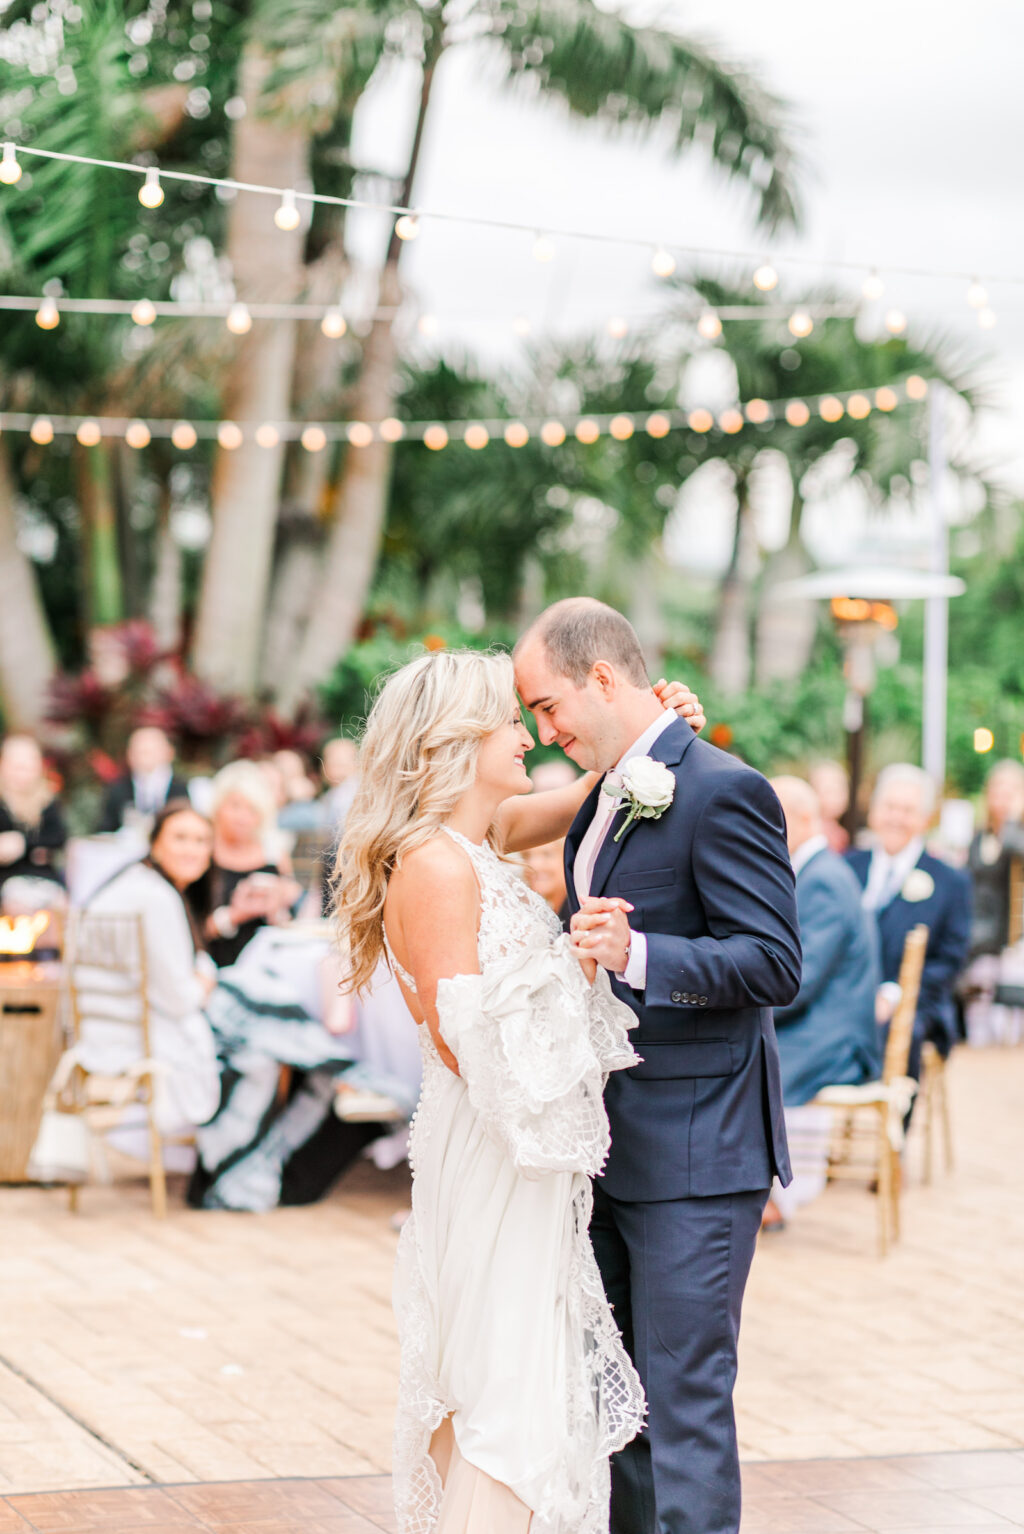 Romantic Pink Outdoor Garden St. Pete Wedding | Bride and Groom First Dance Under String Lights | Tampa Bay Wedding DJ Grant Hemond & Associates